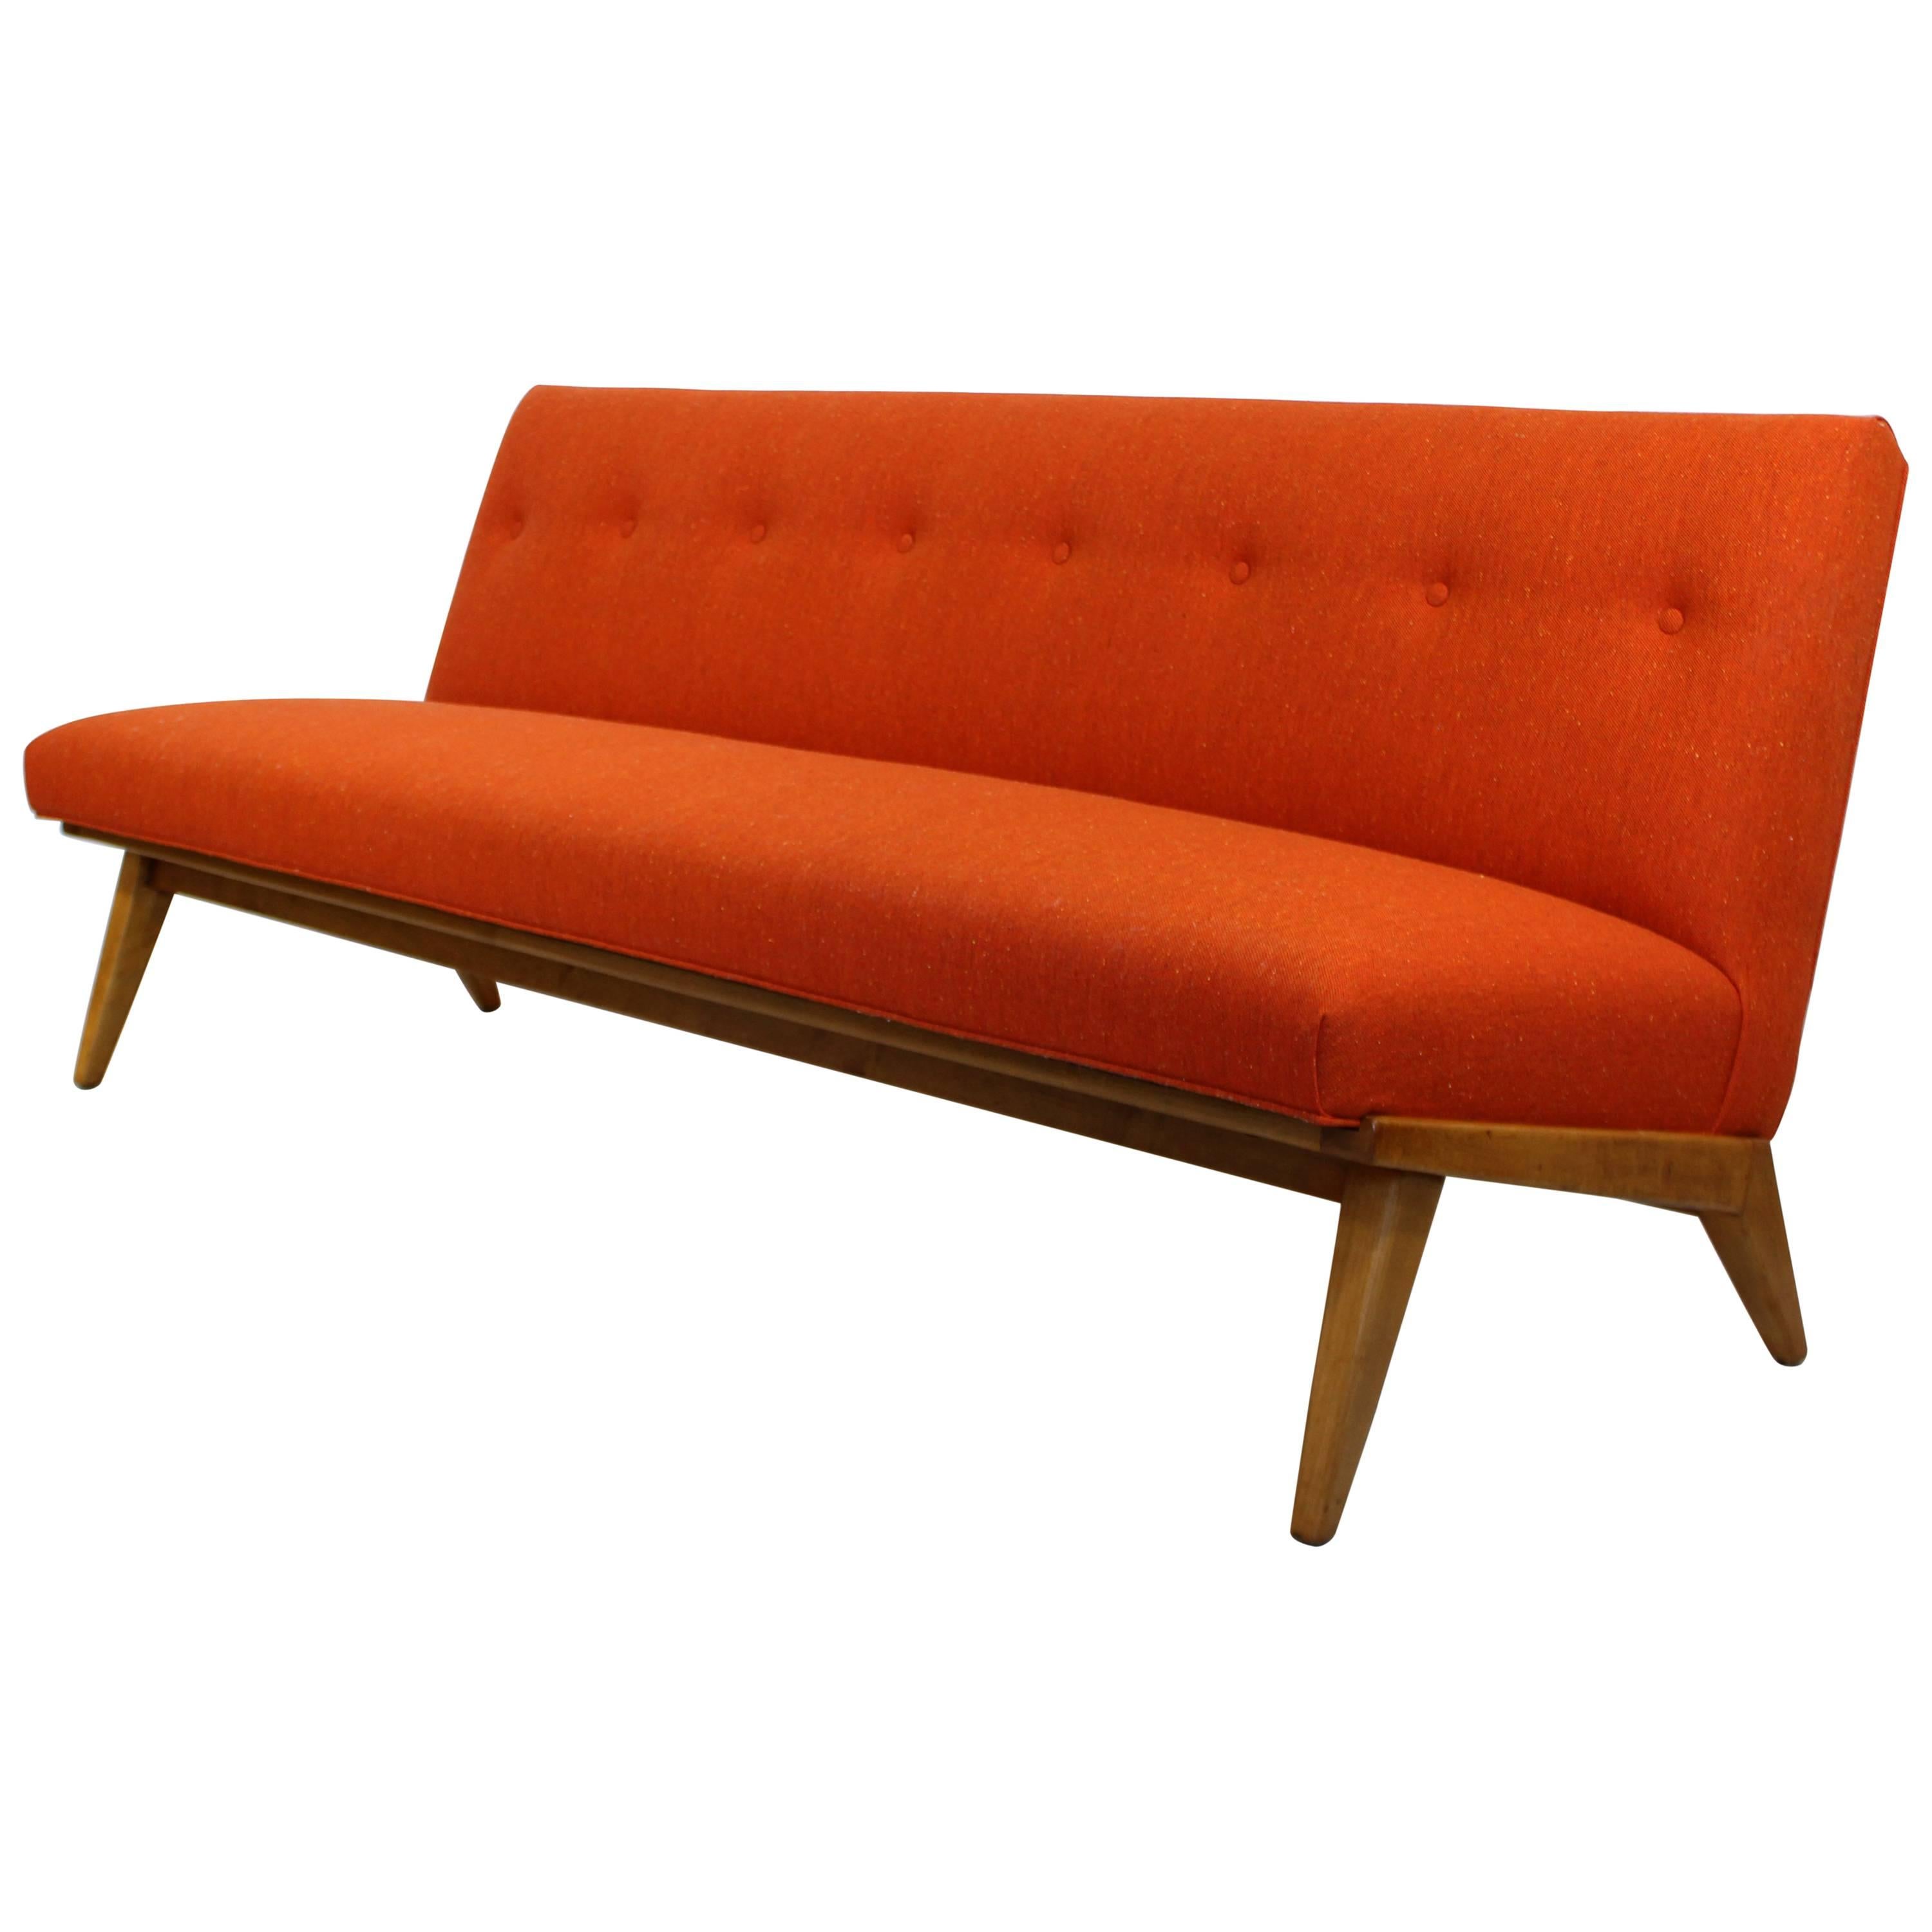 Mid-Century Modern Rare Jens Risom for Knoll Tufted Orange Fabric Sofa, 1950s